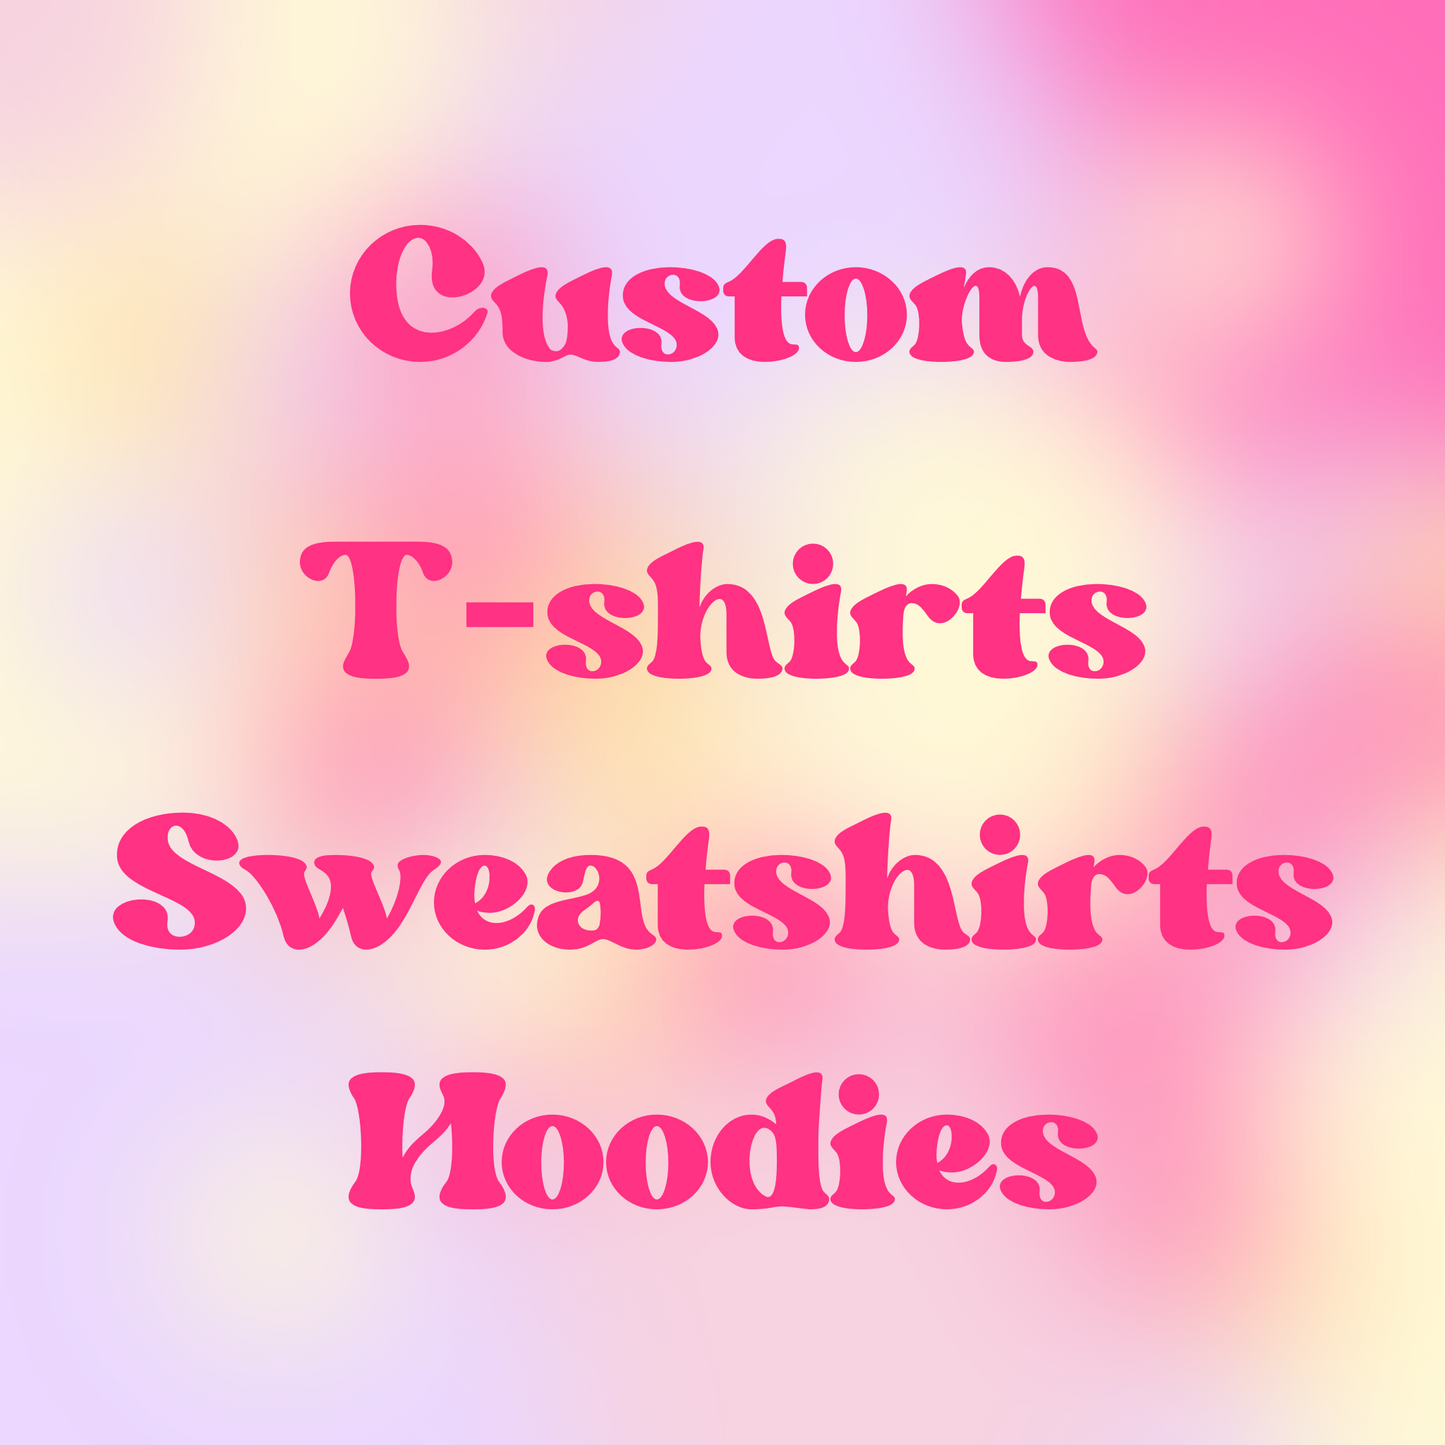 A Custom Sweatshirts & Hoodies